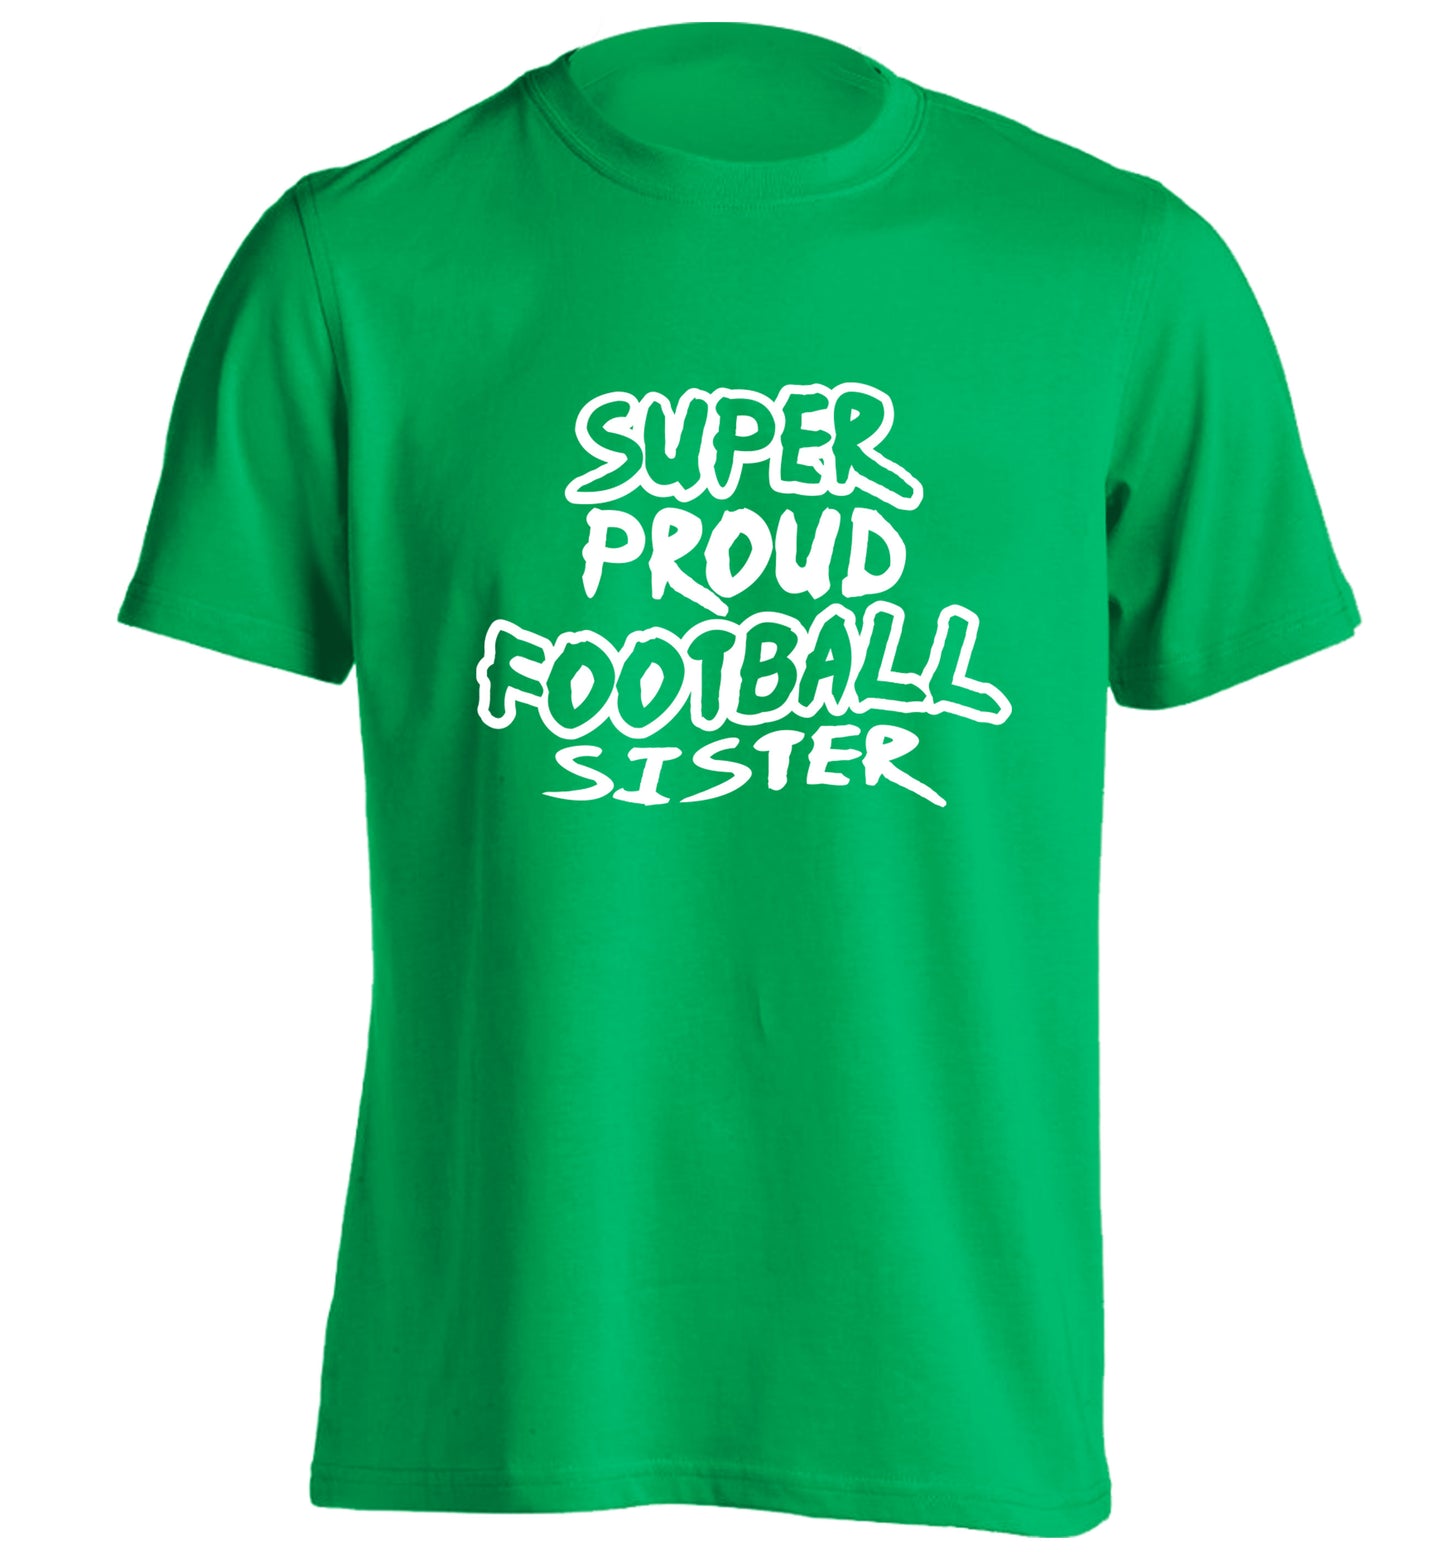 Super proud football sister adults unisexgreen Tshirt 2XL